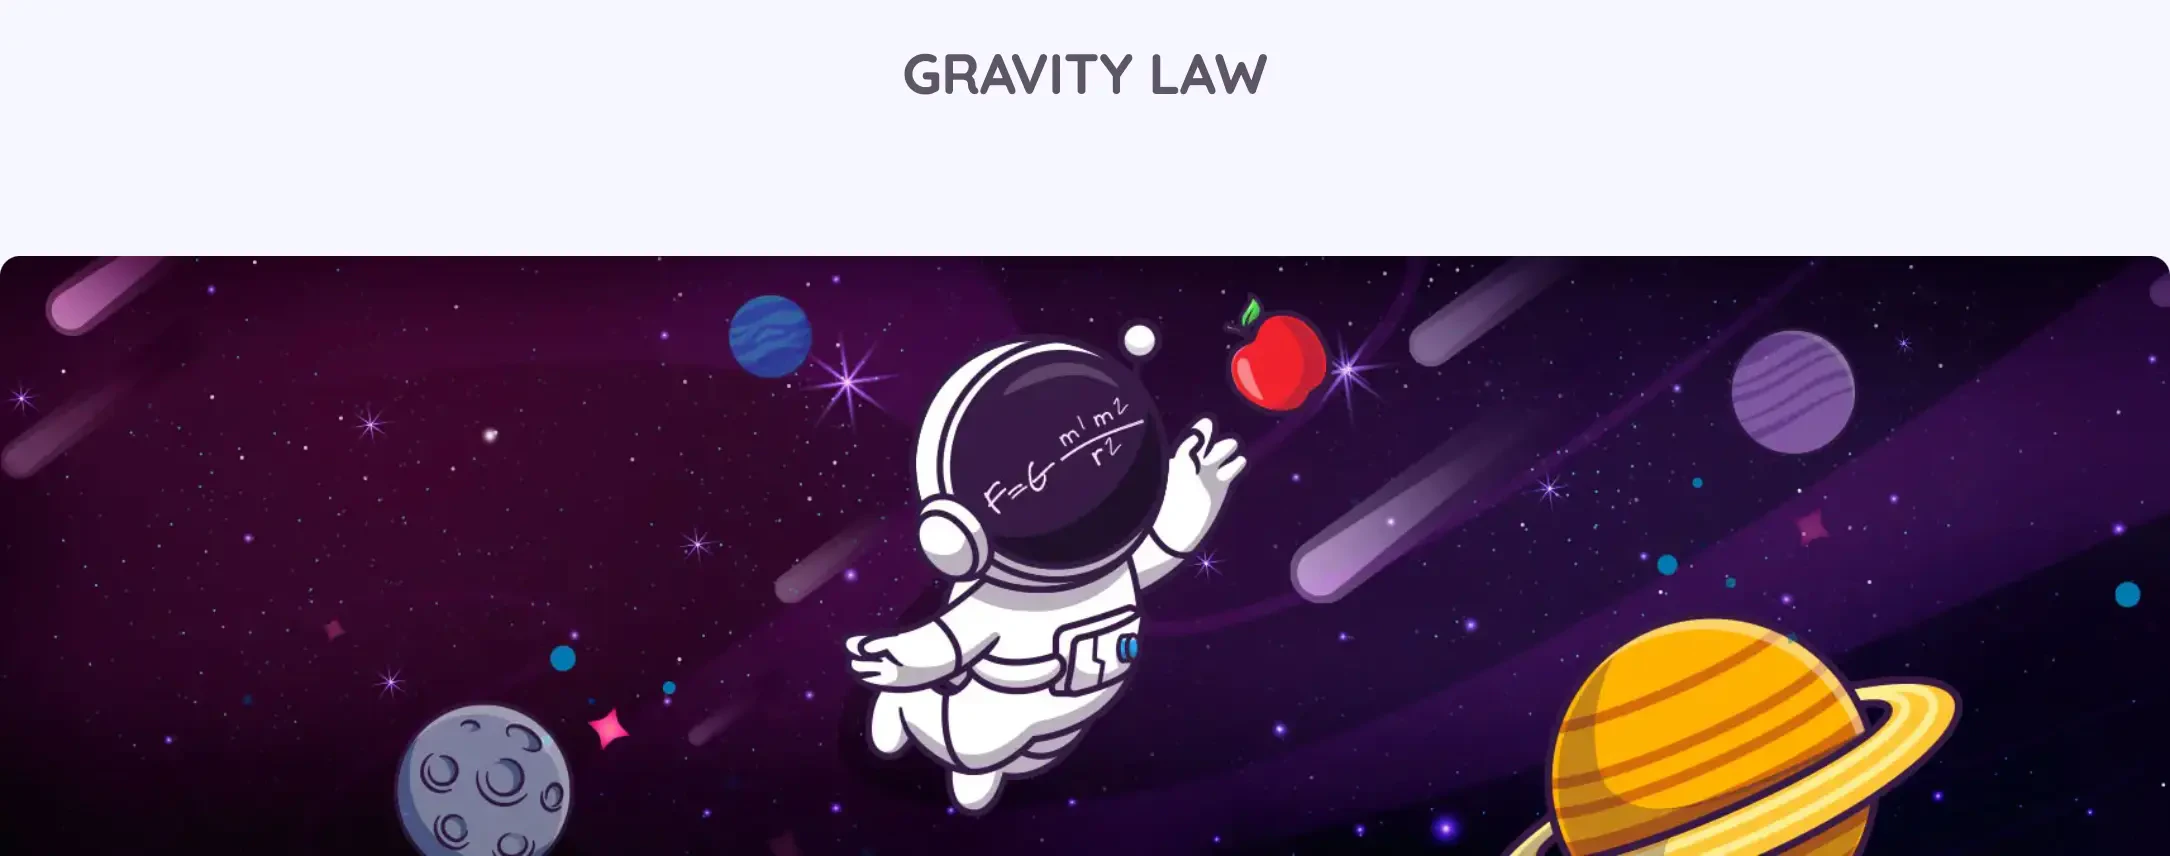 bonus gravity law jackpot bob